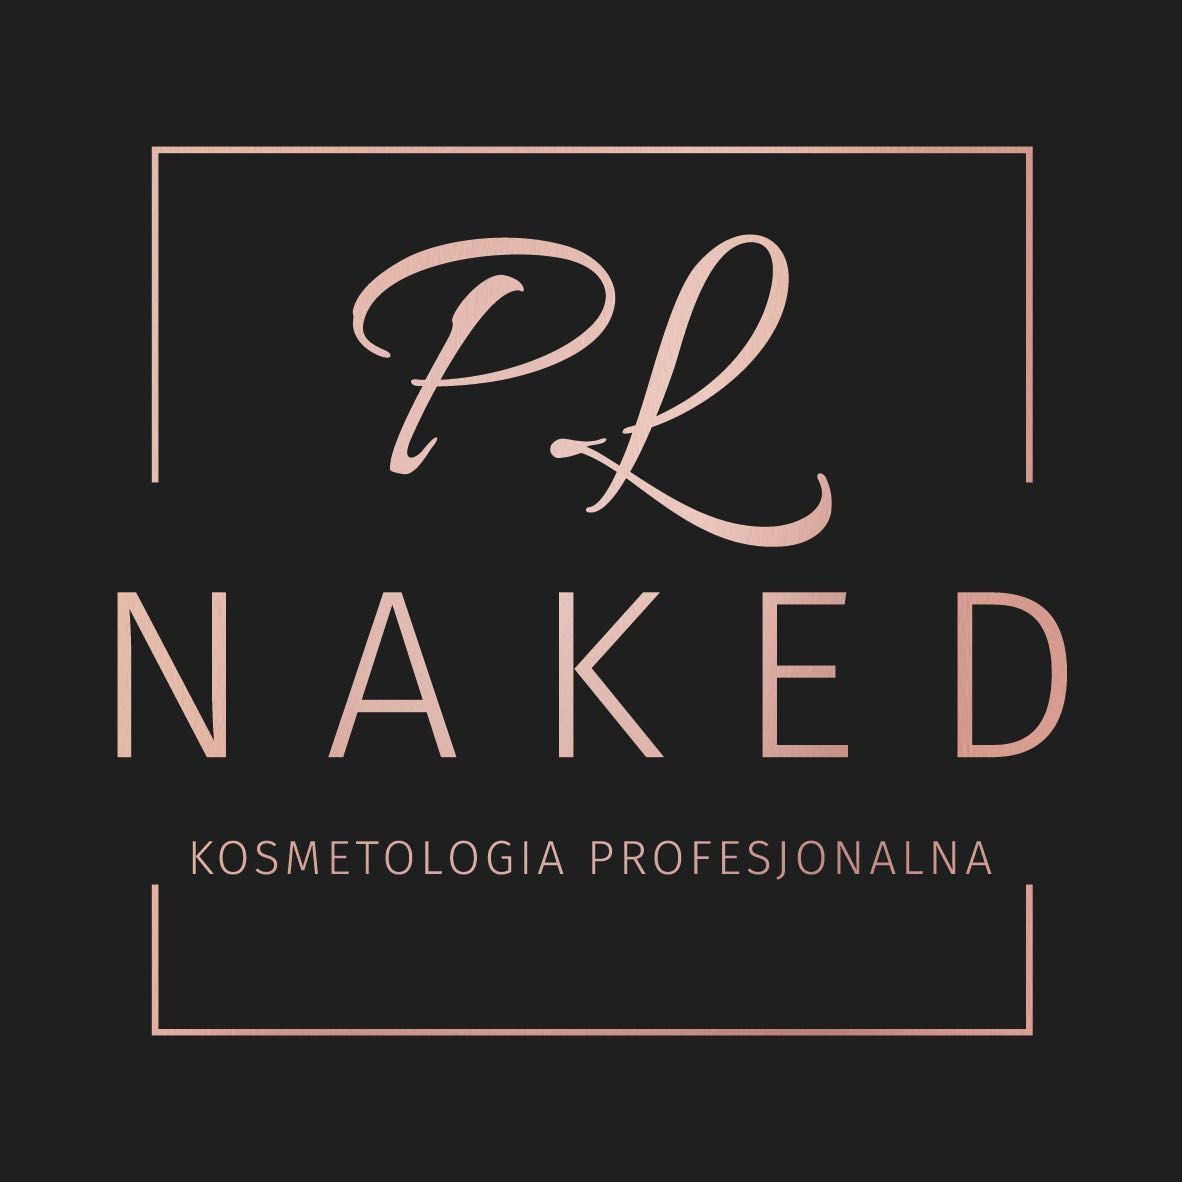 NAKED Kosmetologia Paulina Lubiszewska, Beskidzka 8, 85-166, Bydgoszcz